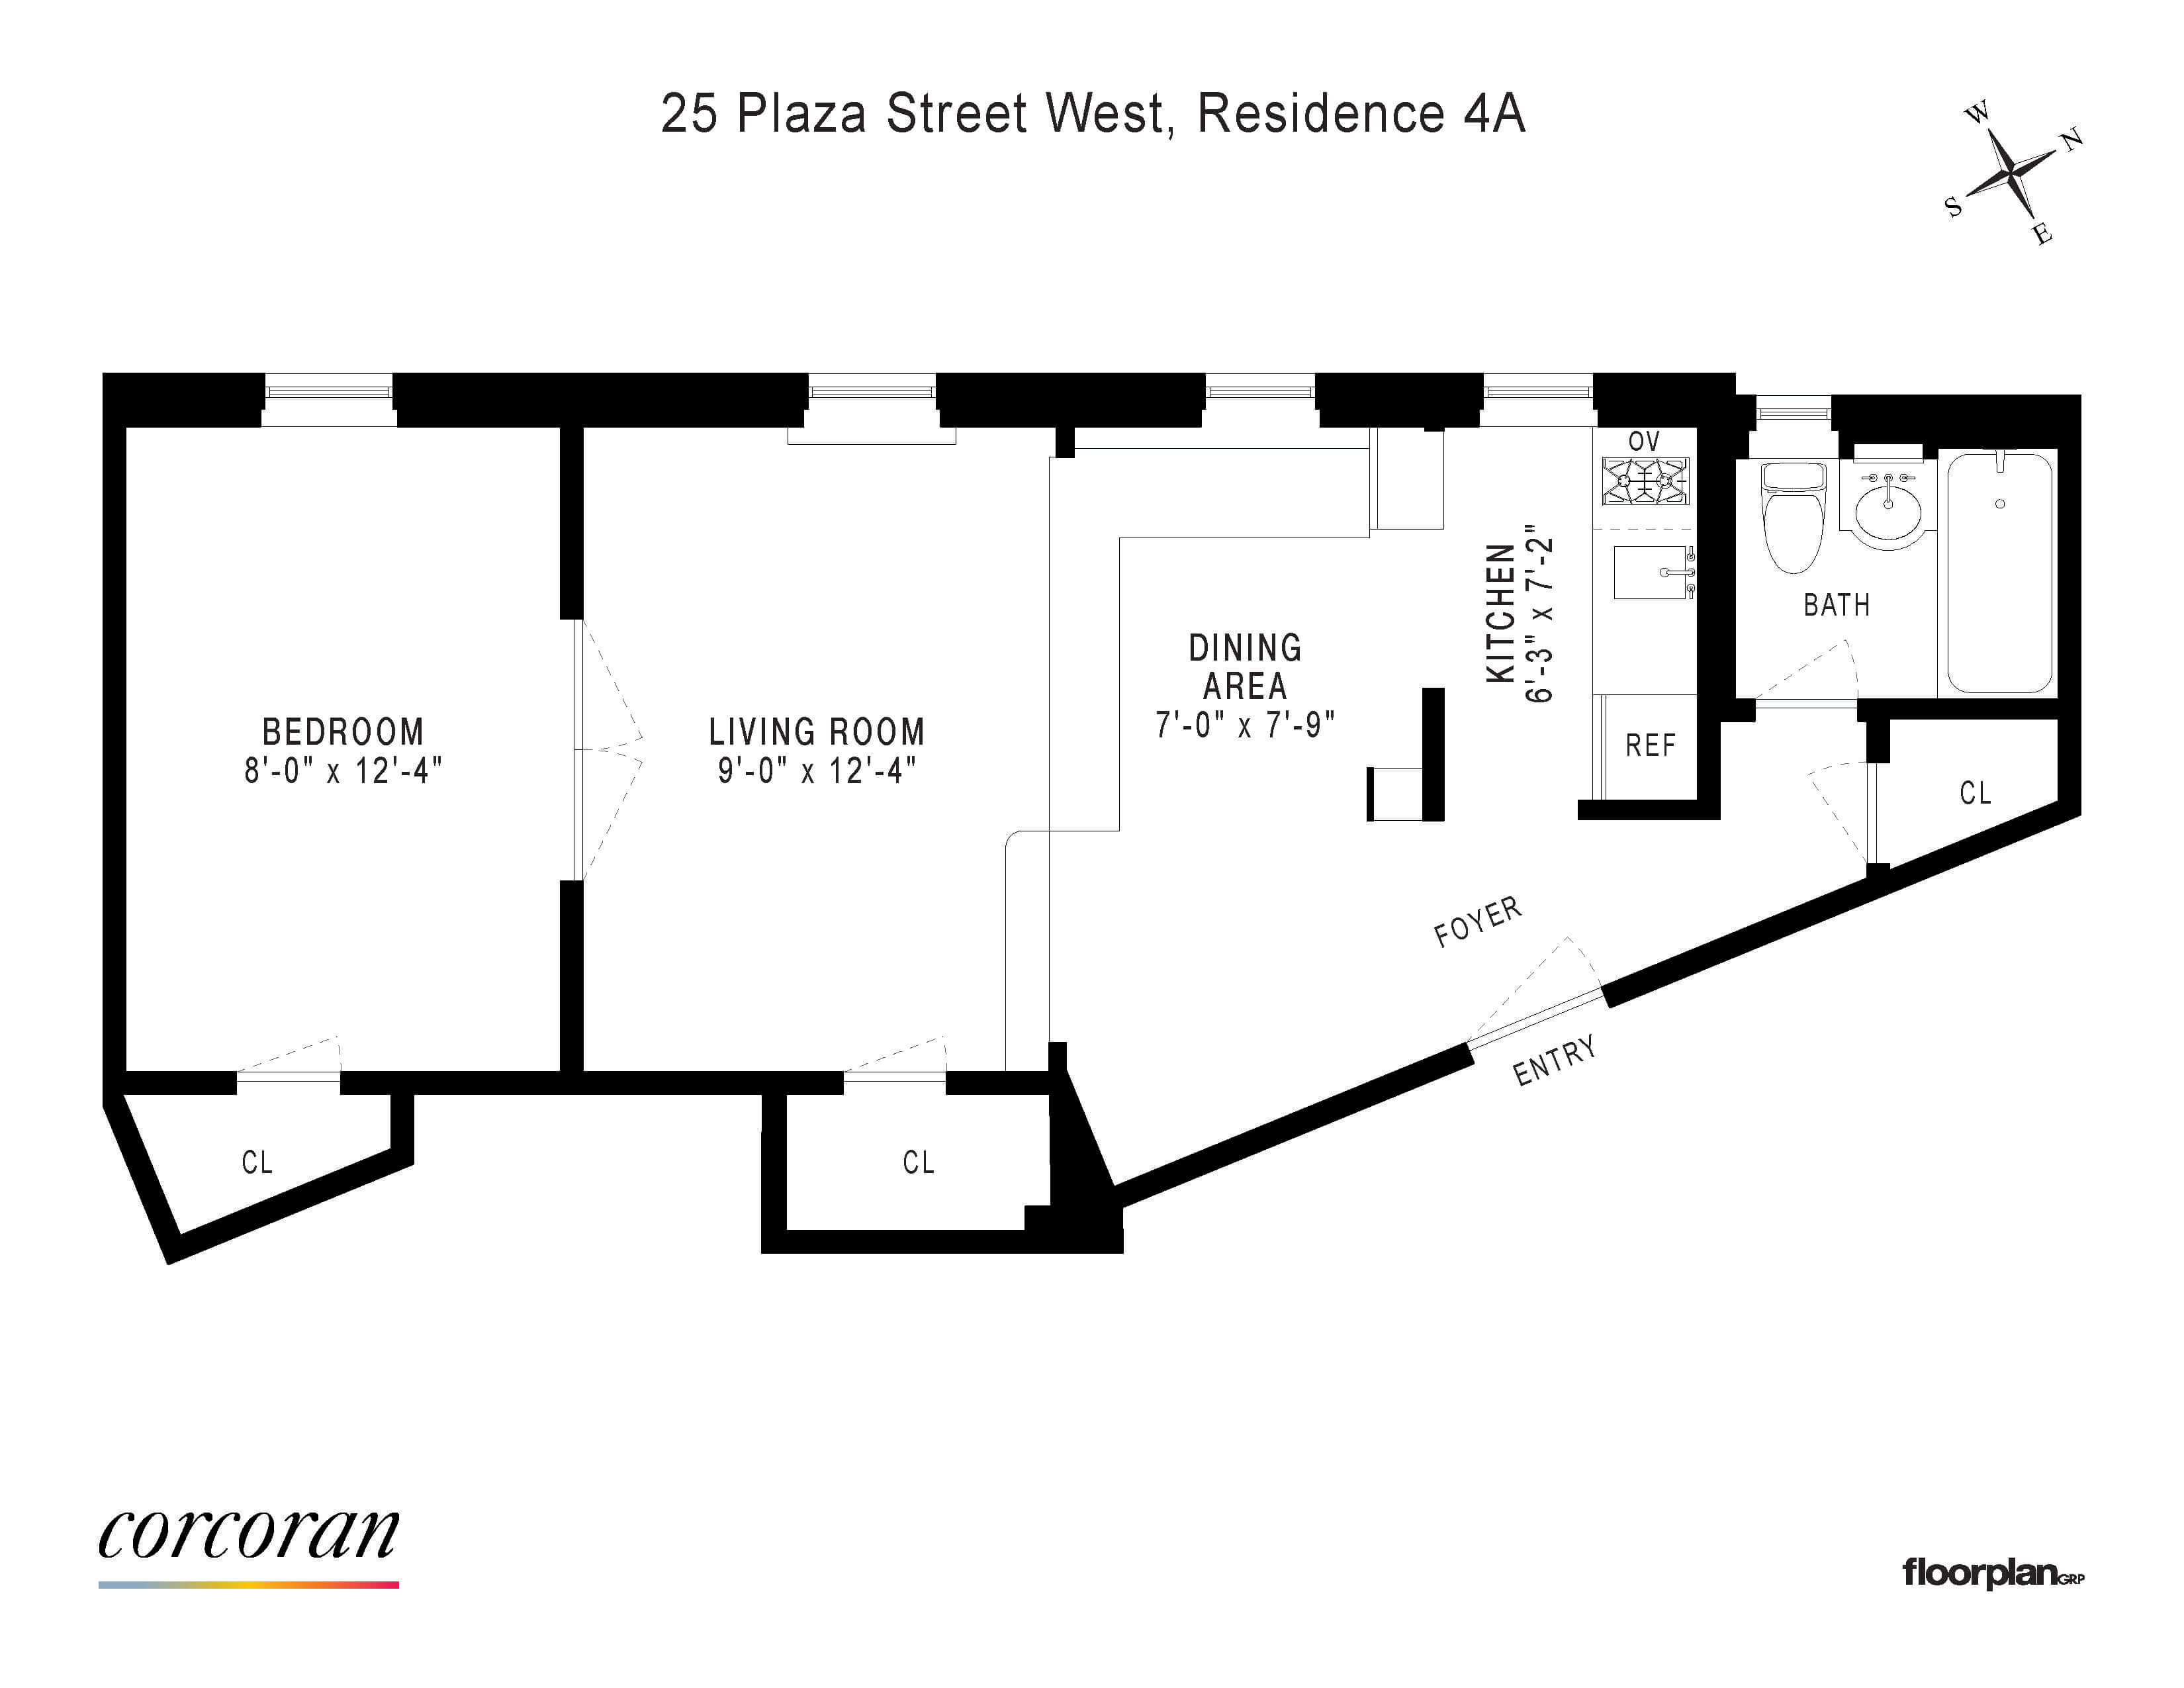 floorplan of 25 plaza street west